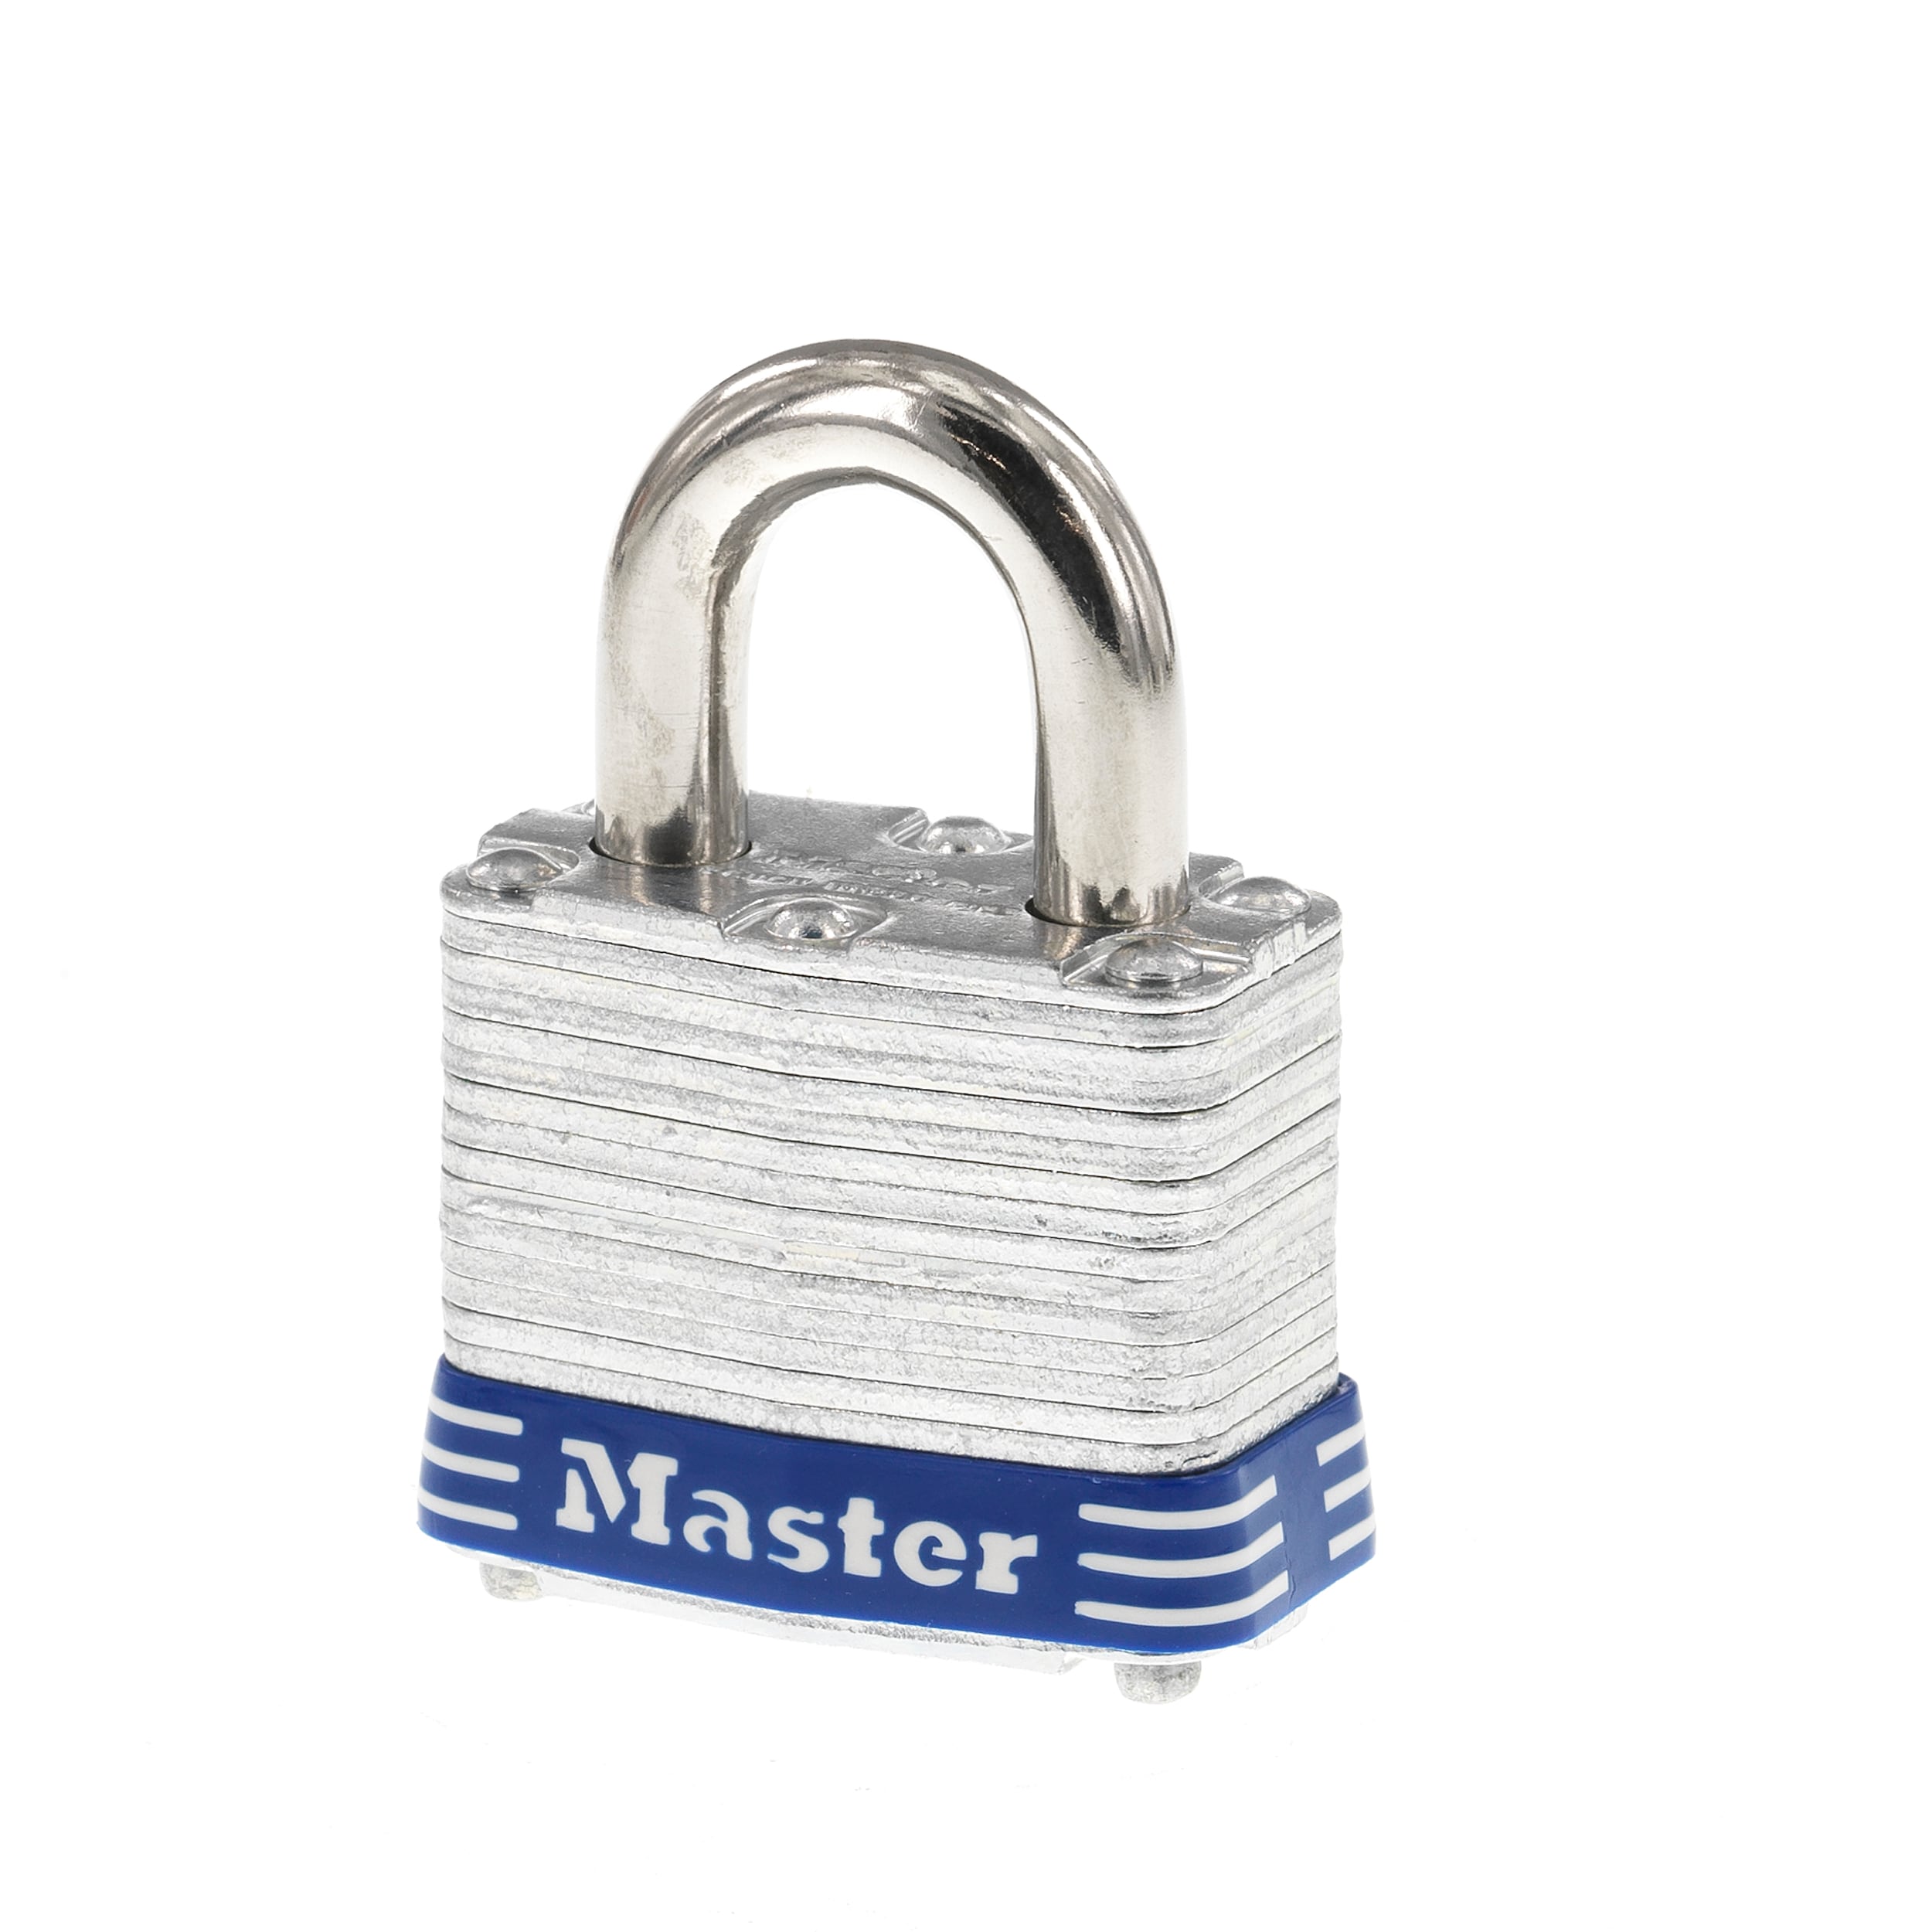 Master Lock 3KA3303 1 56 in KA Steel Padlock for sale online 